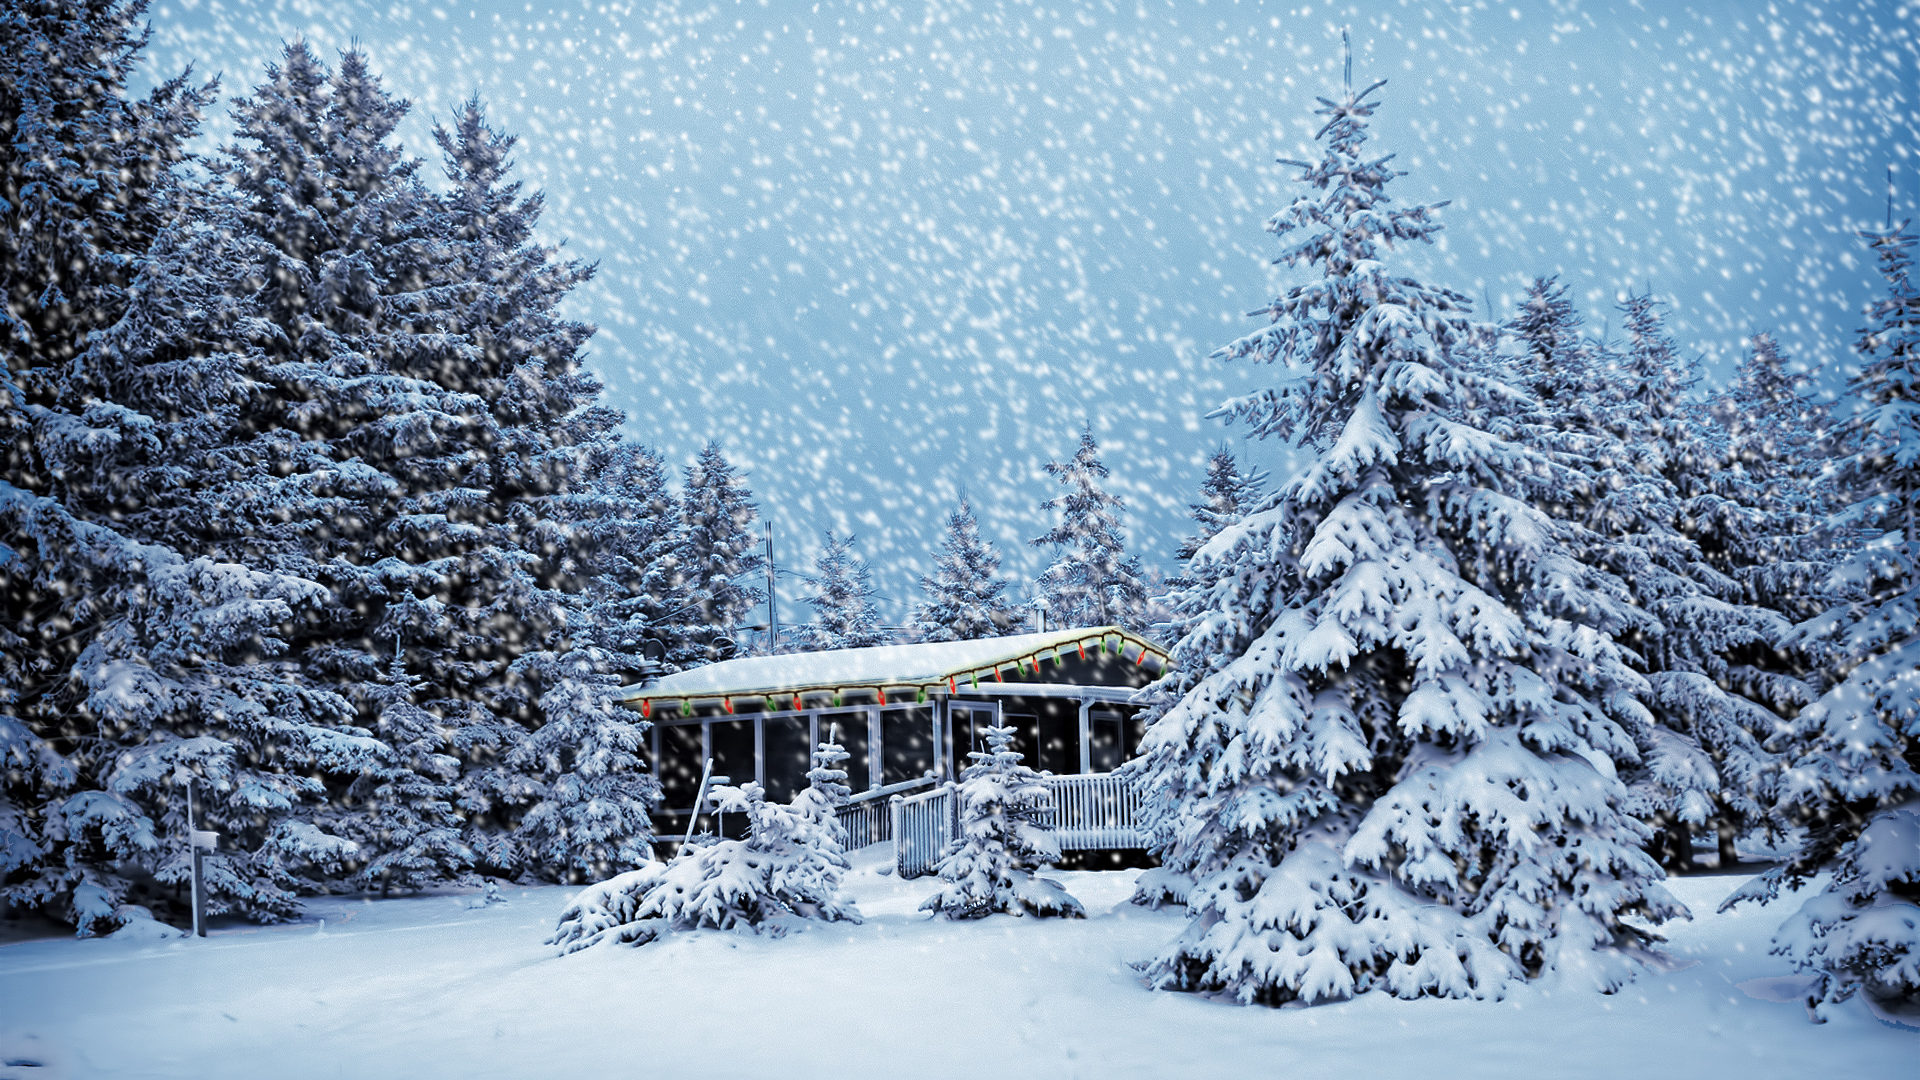 a snowy christmas scene in Canada